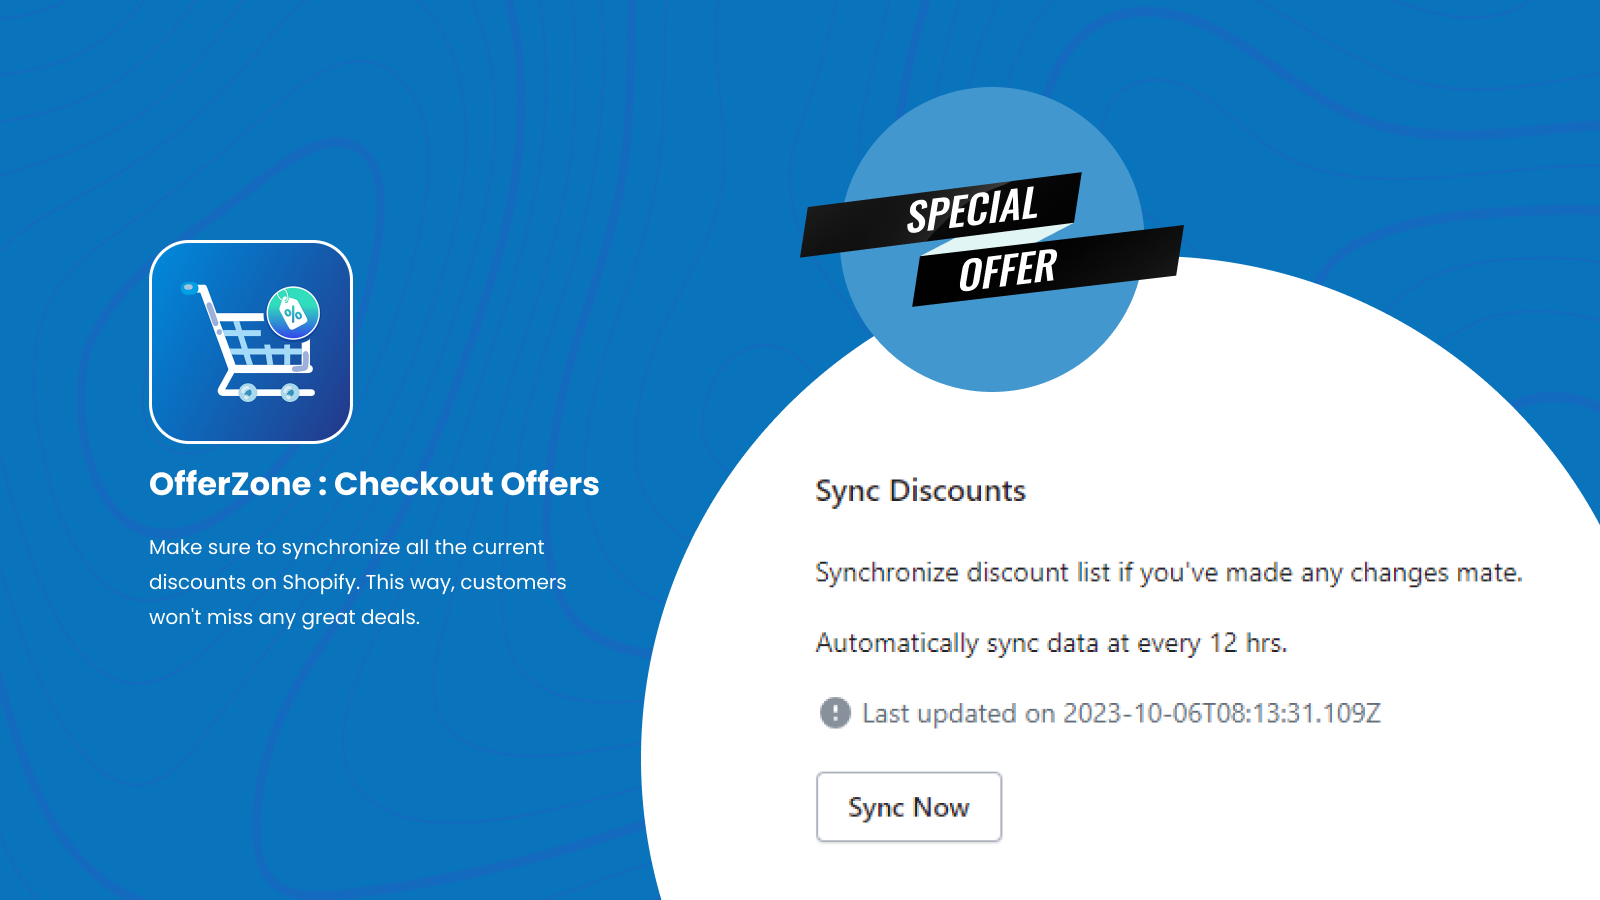 Sync Discounts